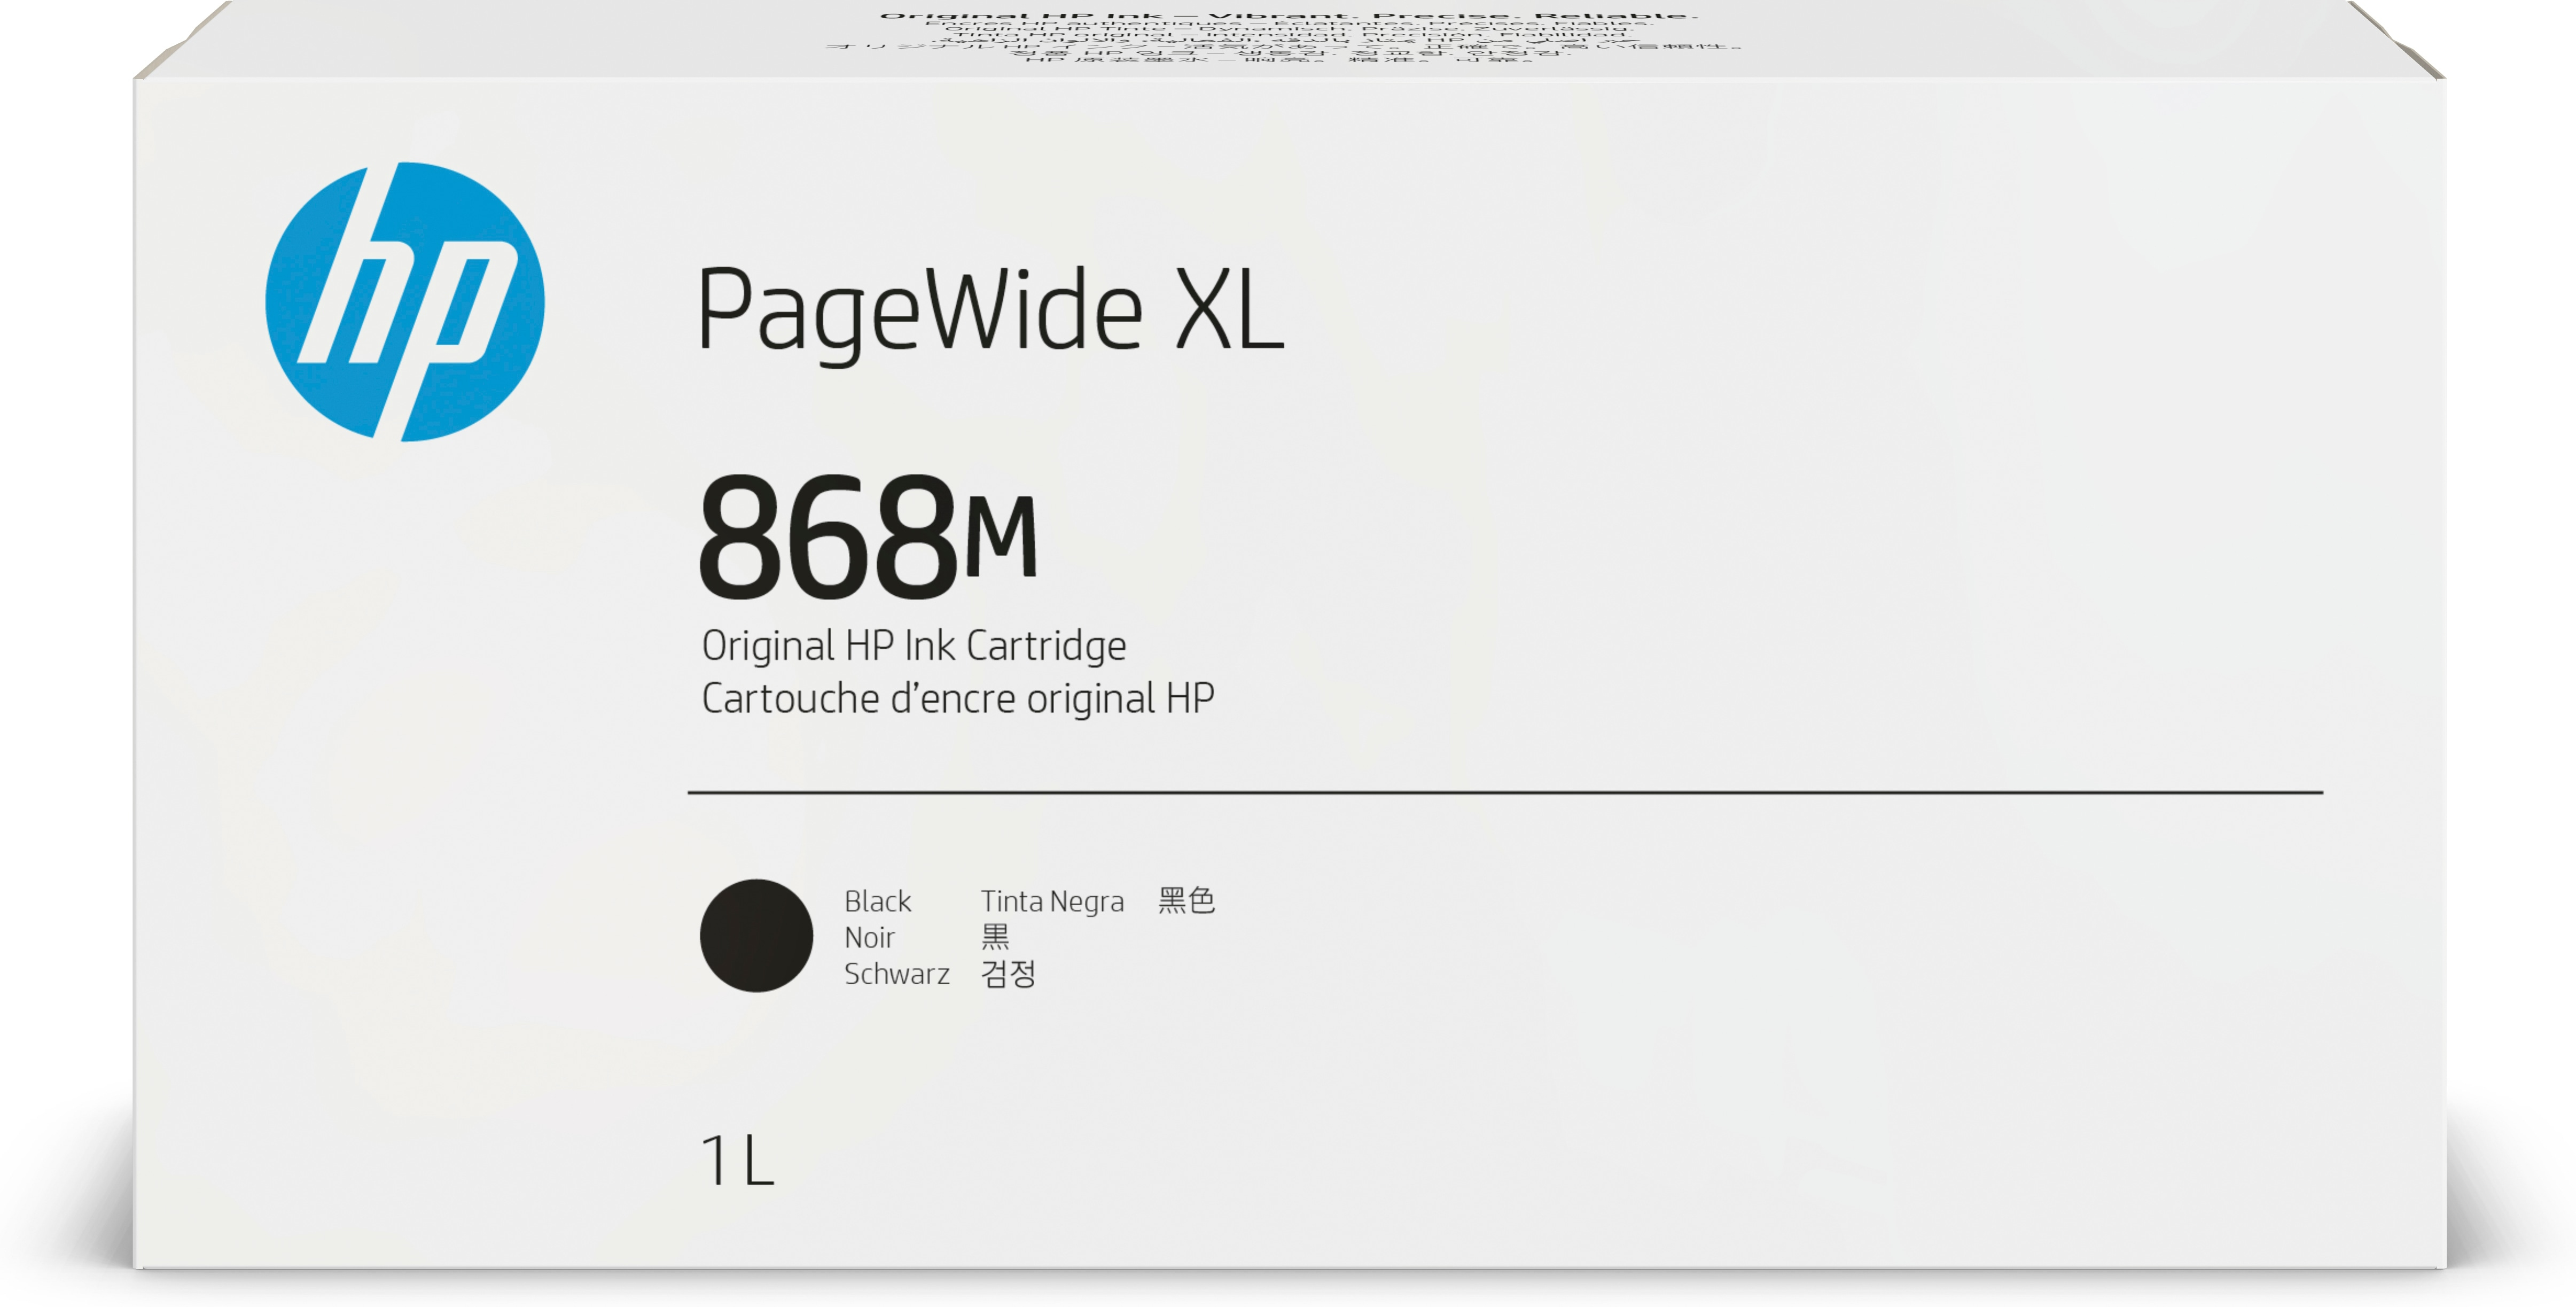 HP 868M 1 liter svart PageWide XL-bläckpatron